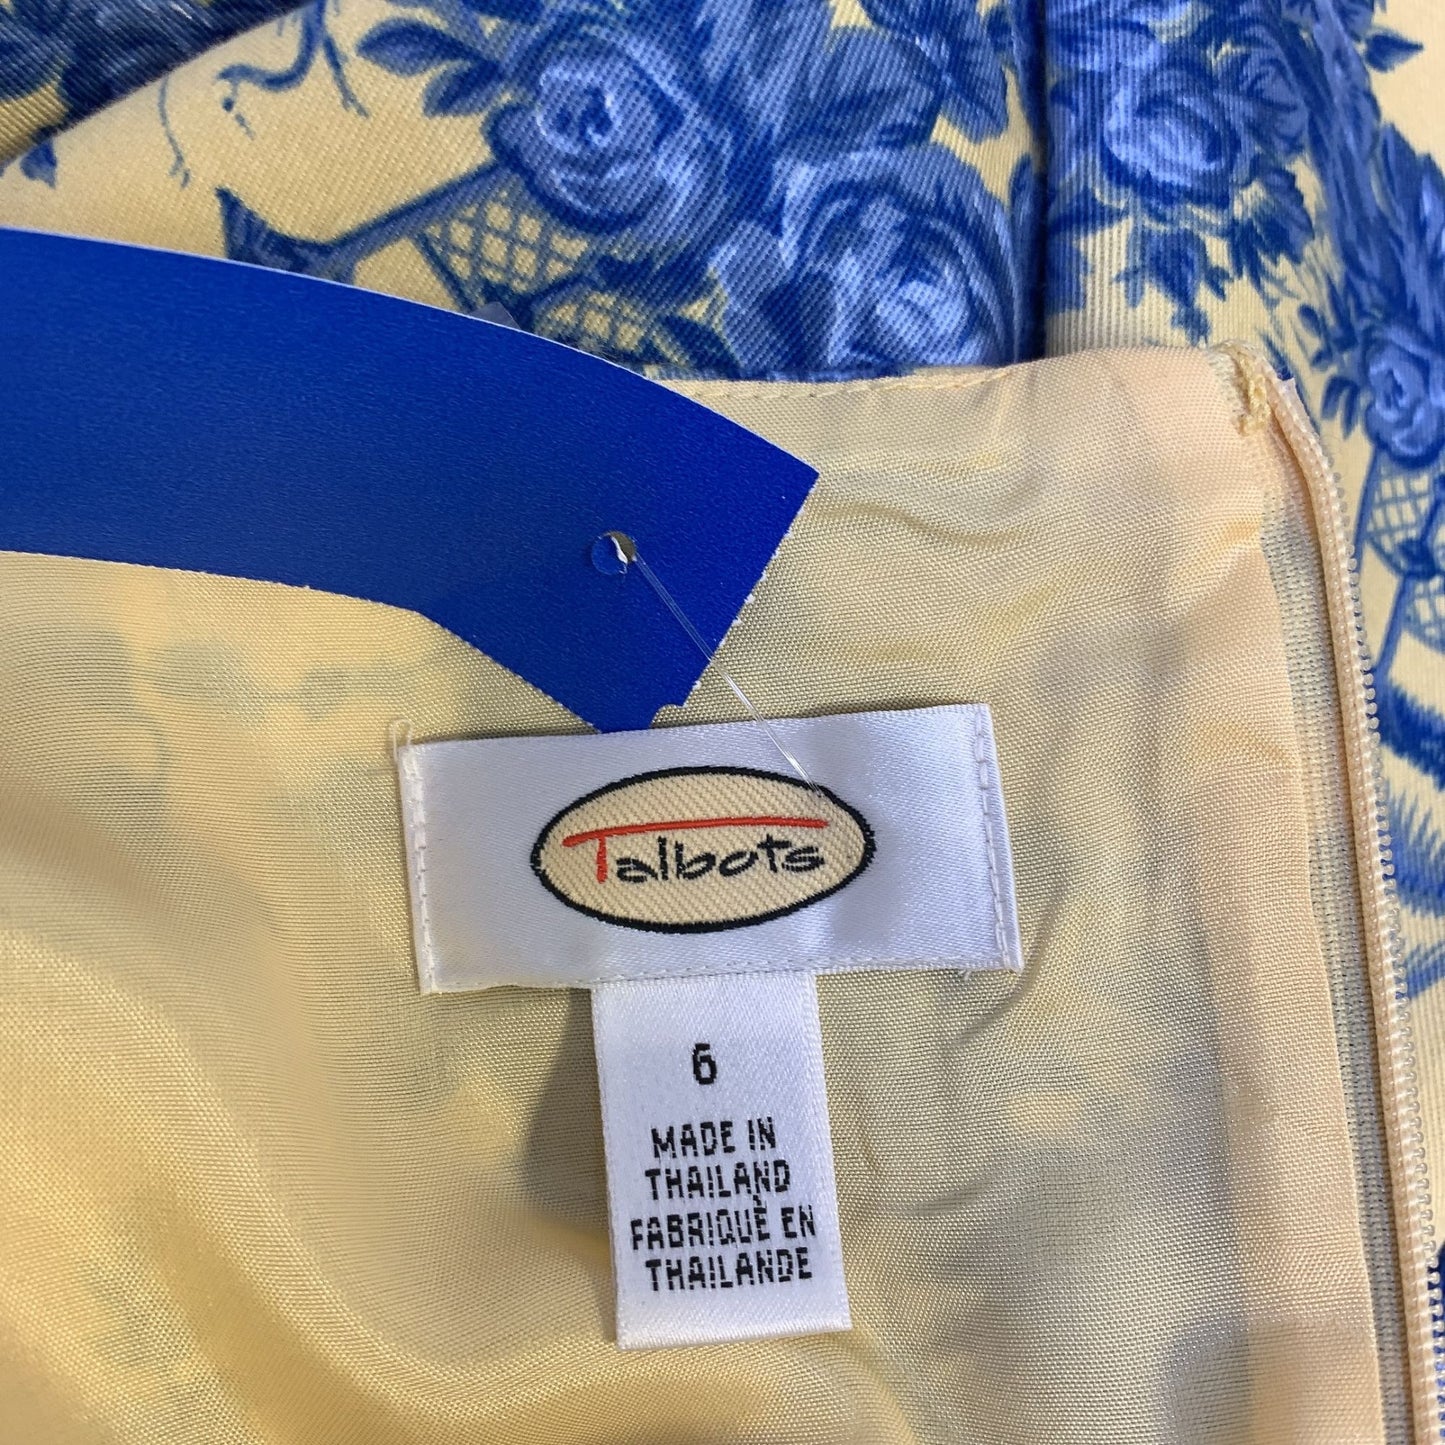 Talbots Yellow & Blue Floral Print Dress Size 6